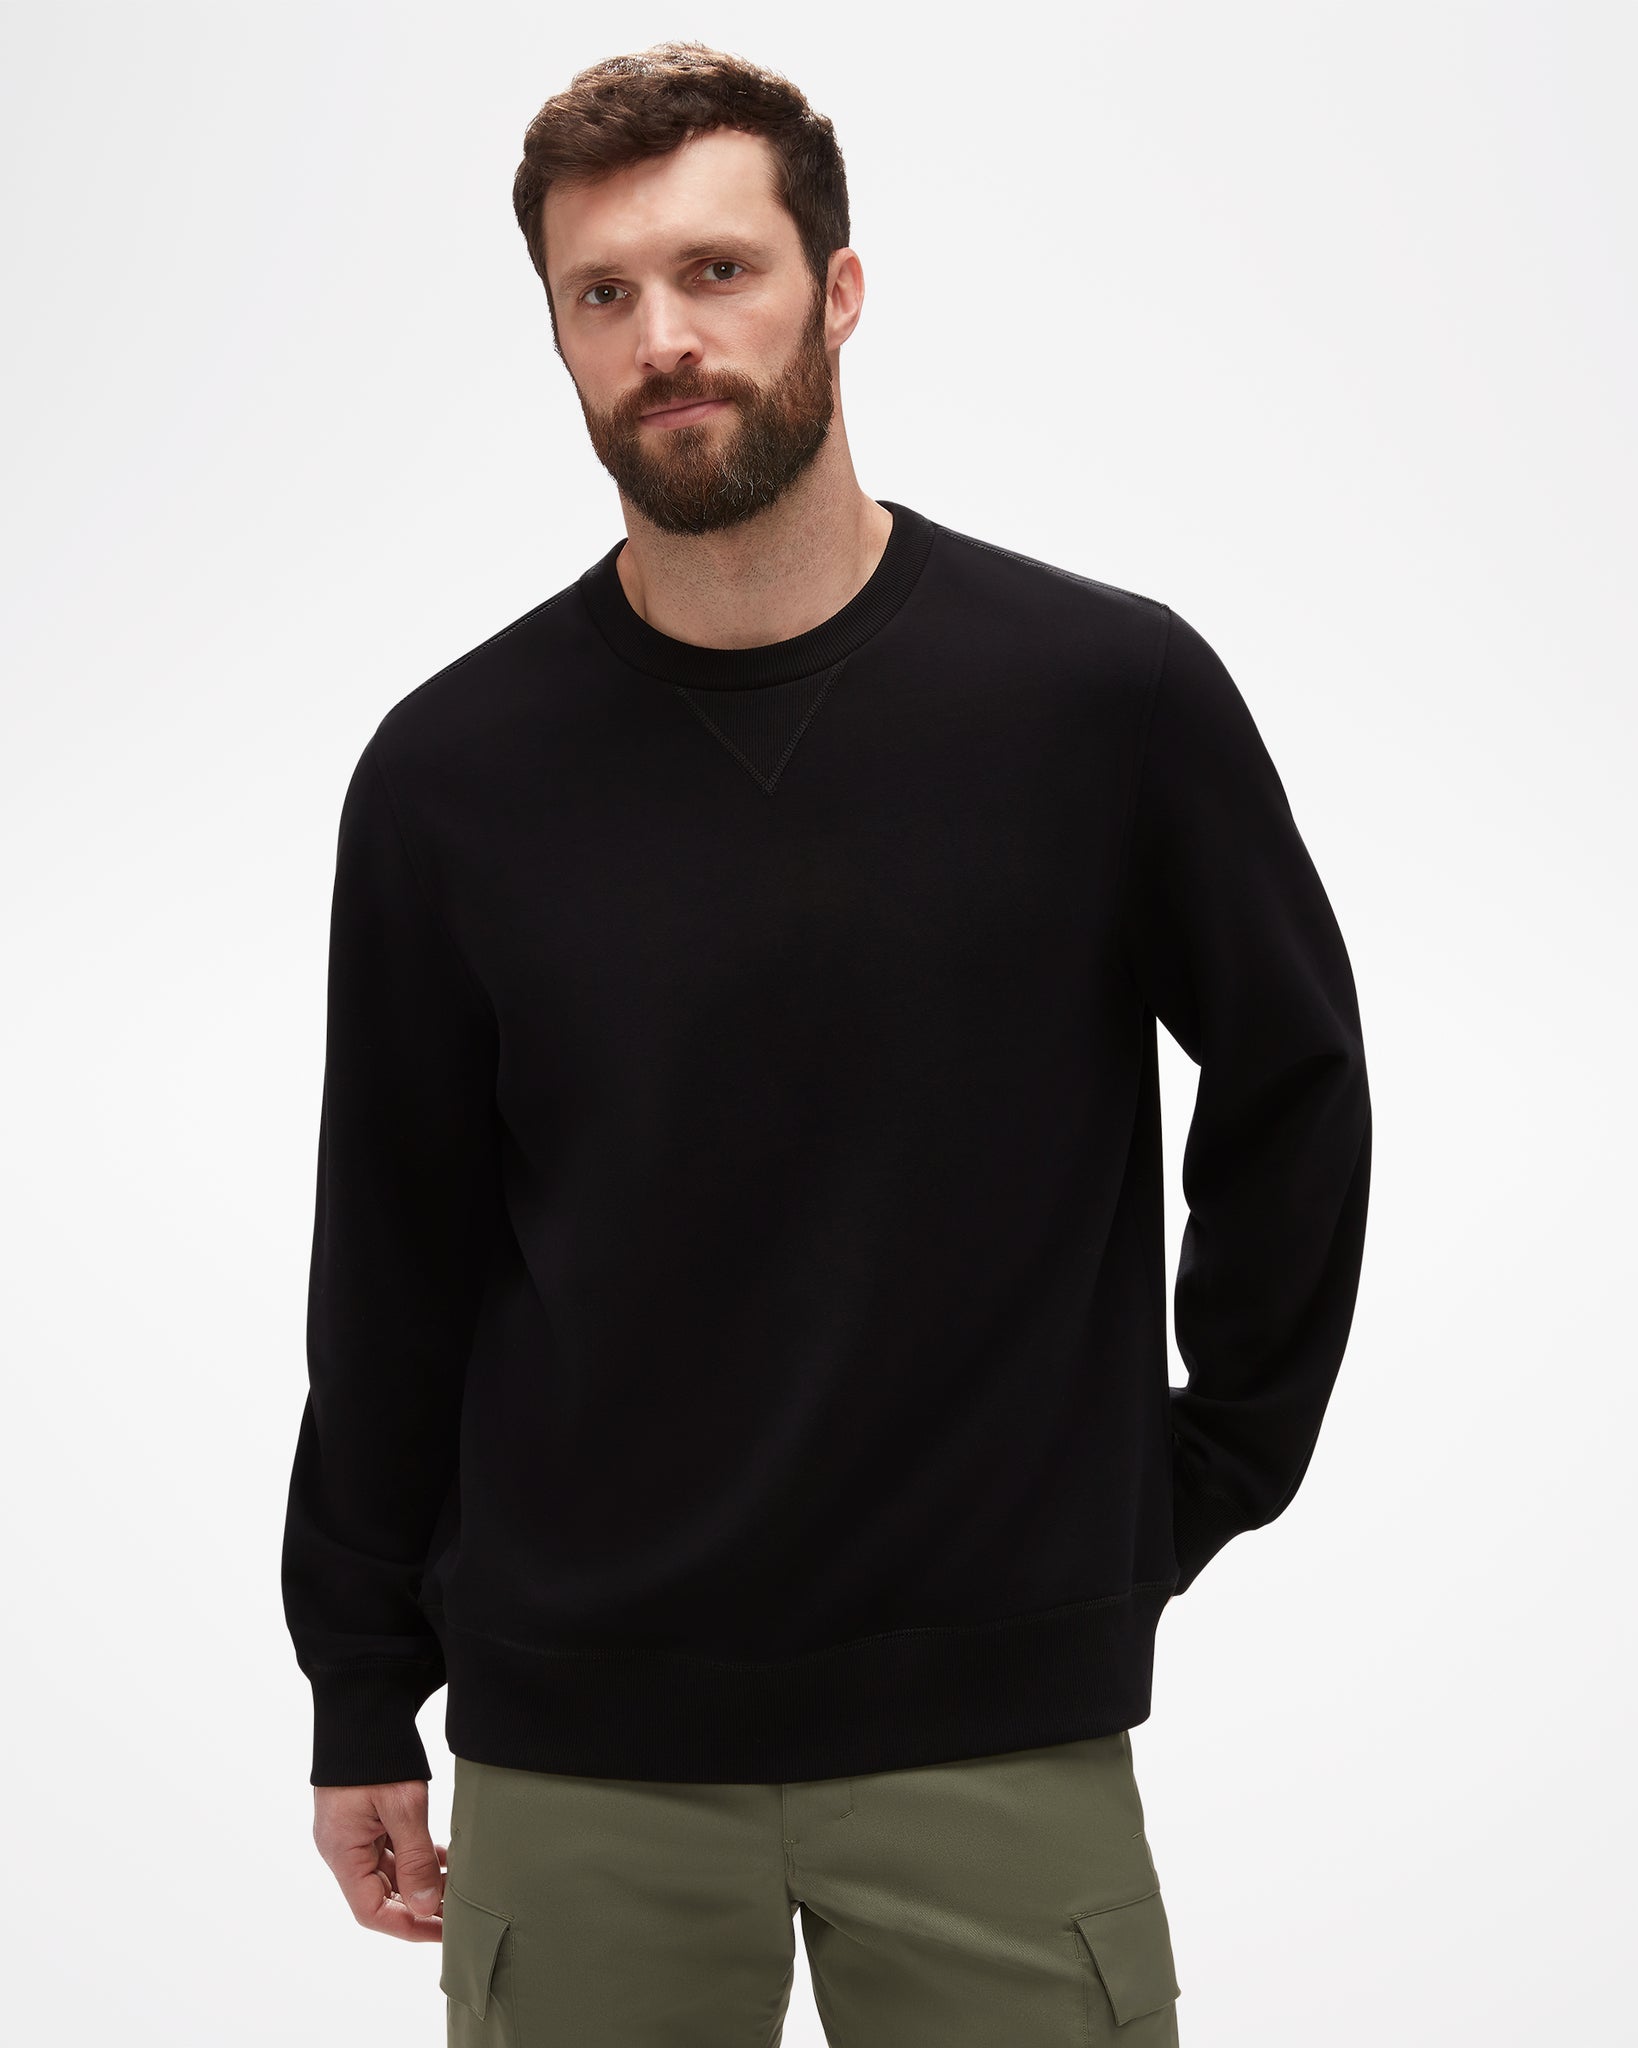 Men's Hoodies & Sweatshirts  Premium Sweatshirts by ASPENX